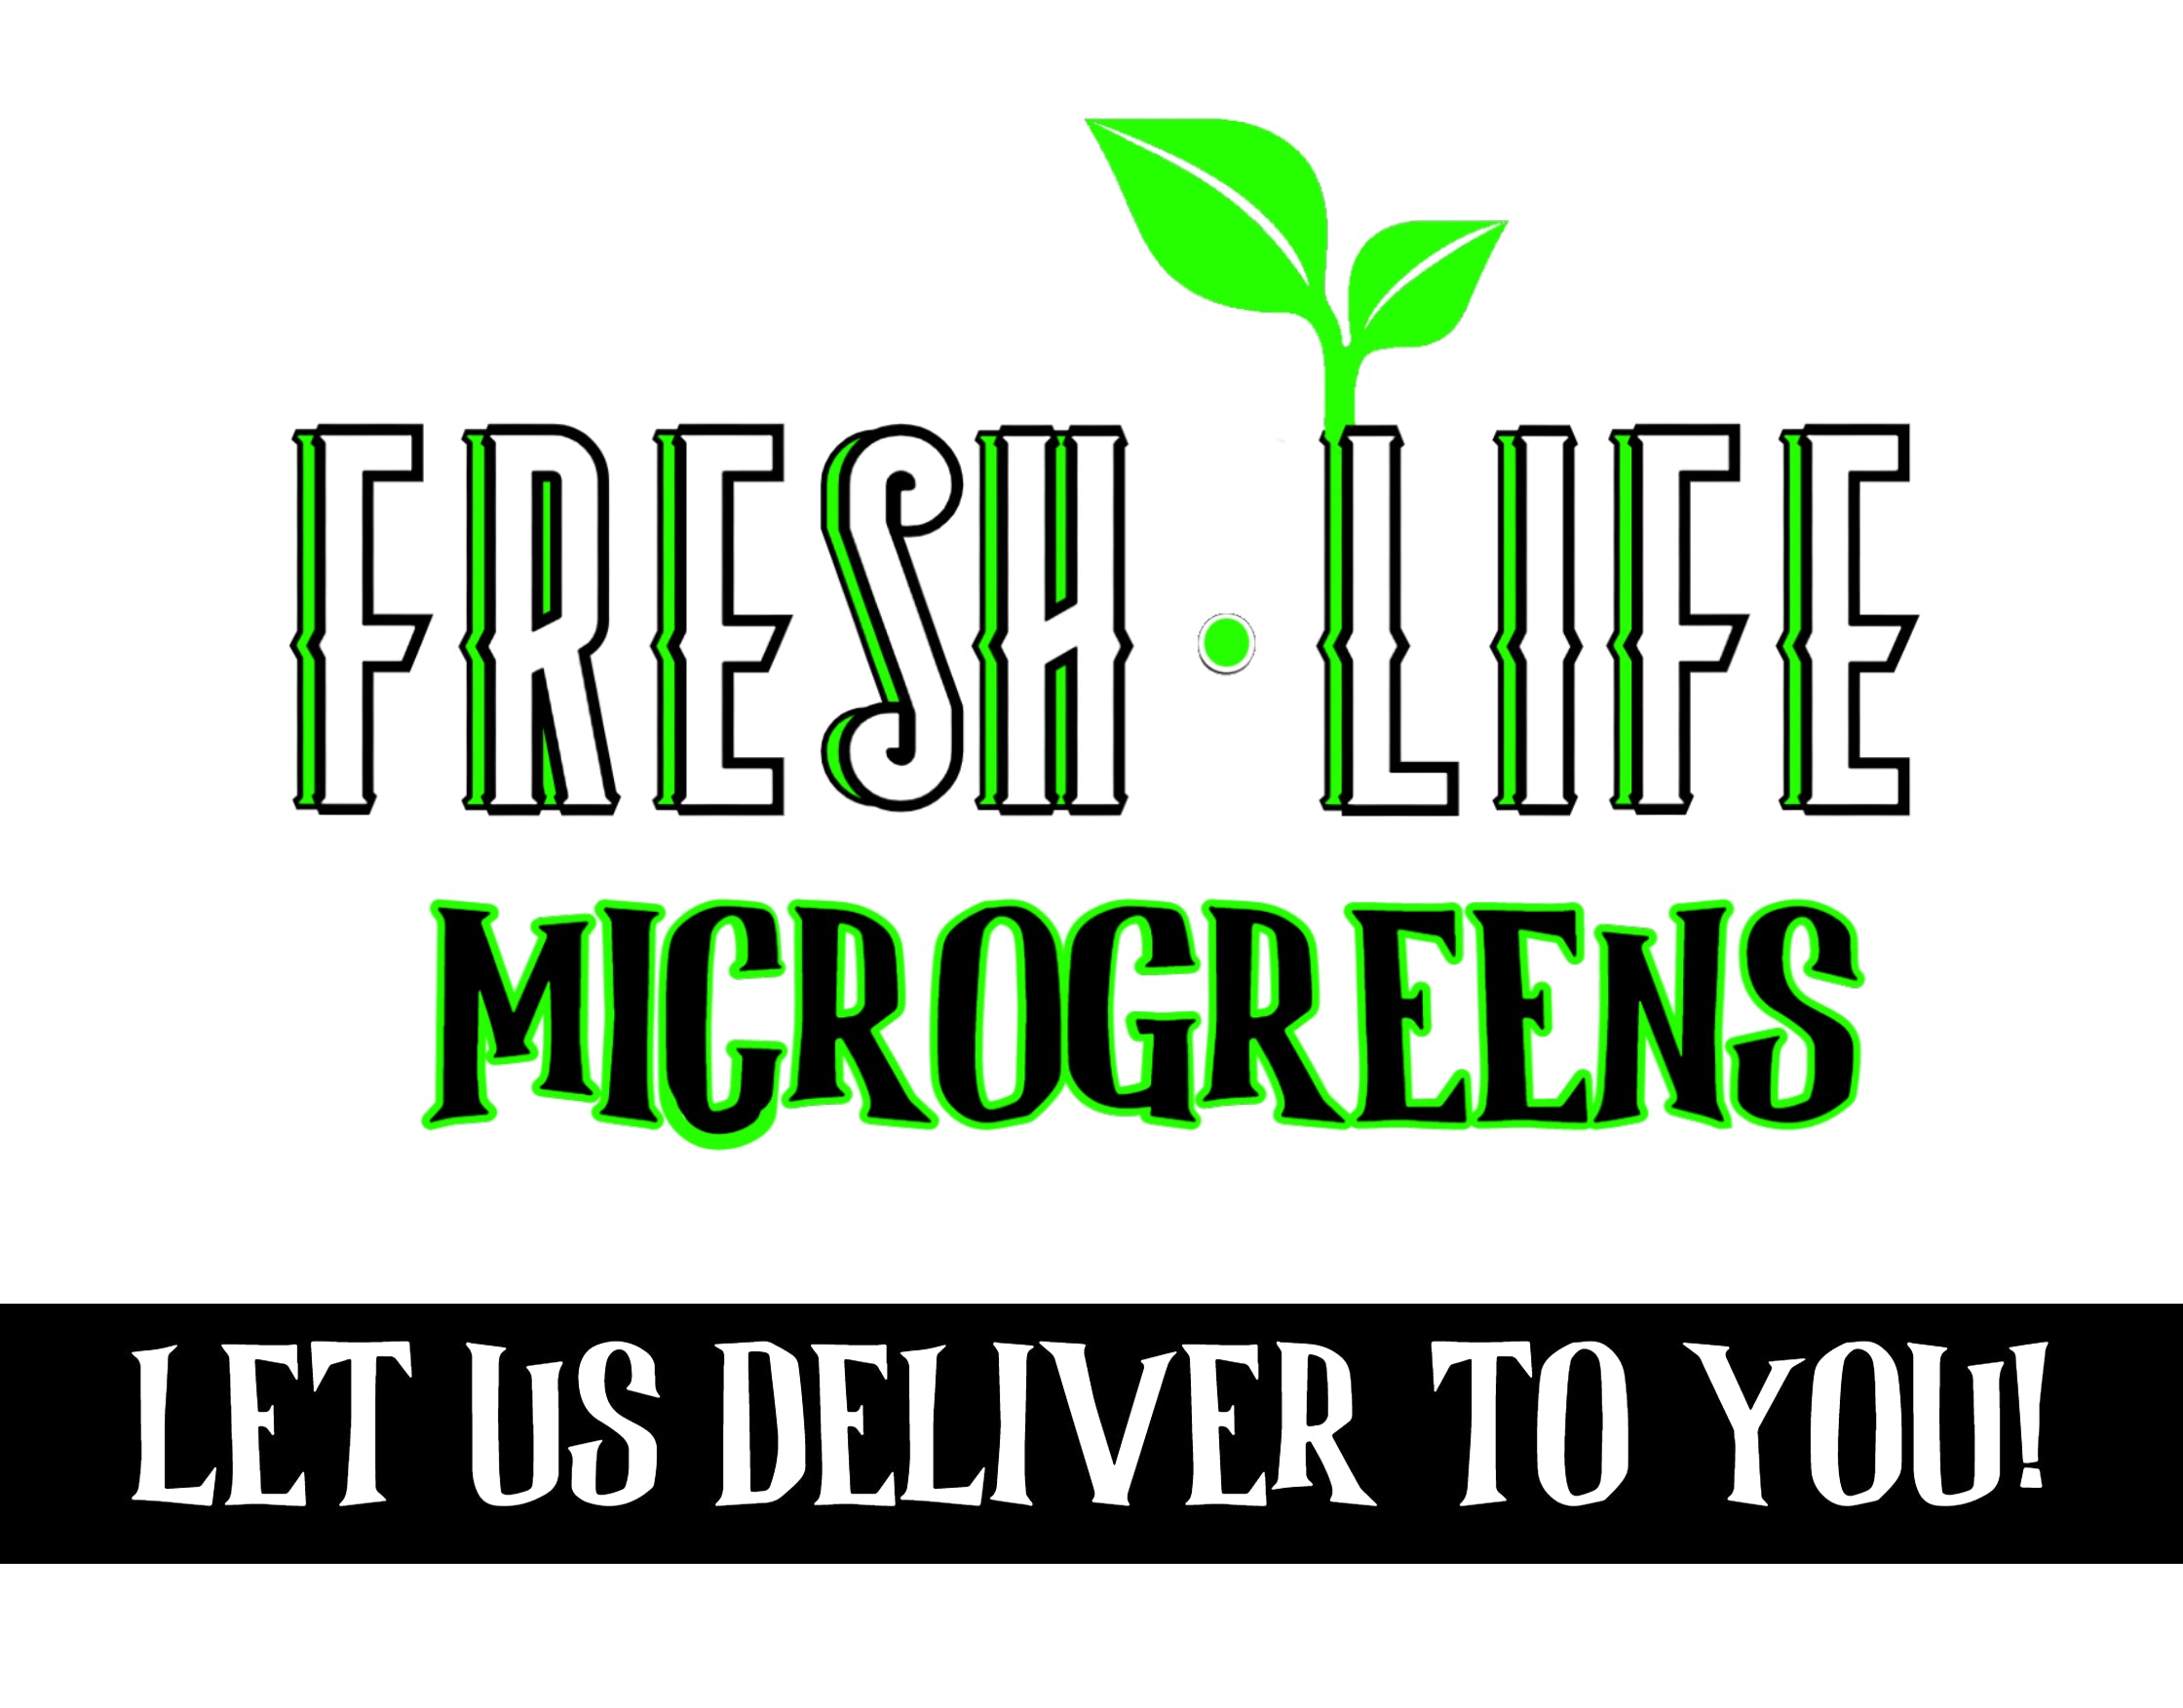 FreshLife Microgreens